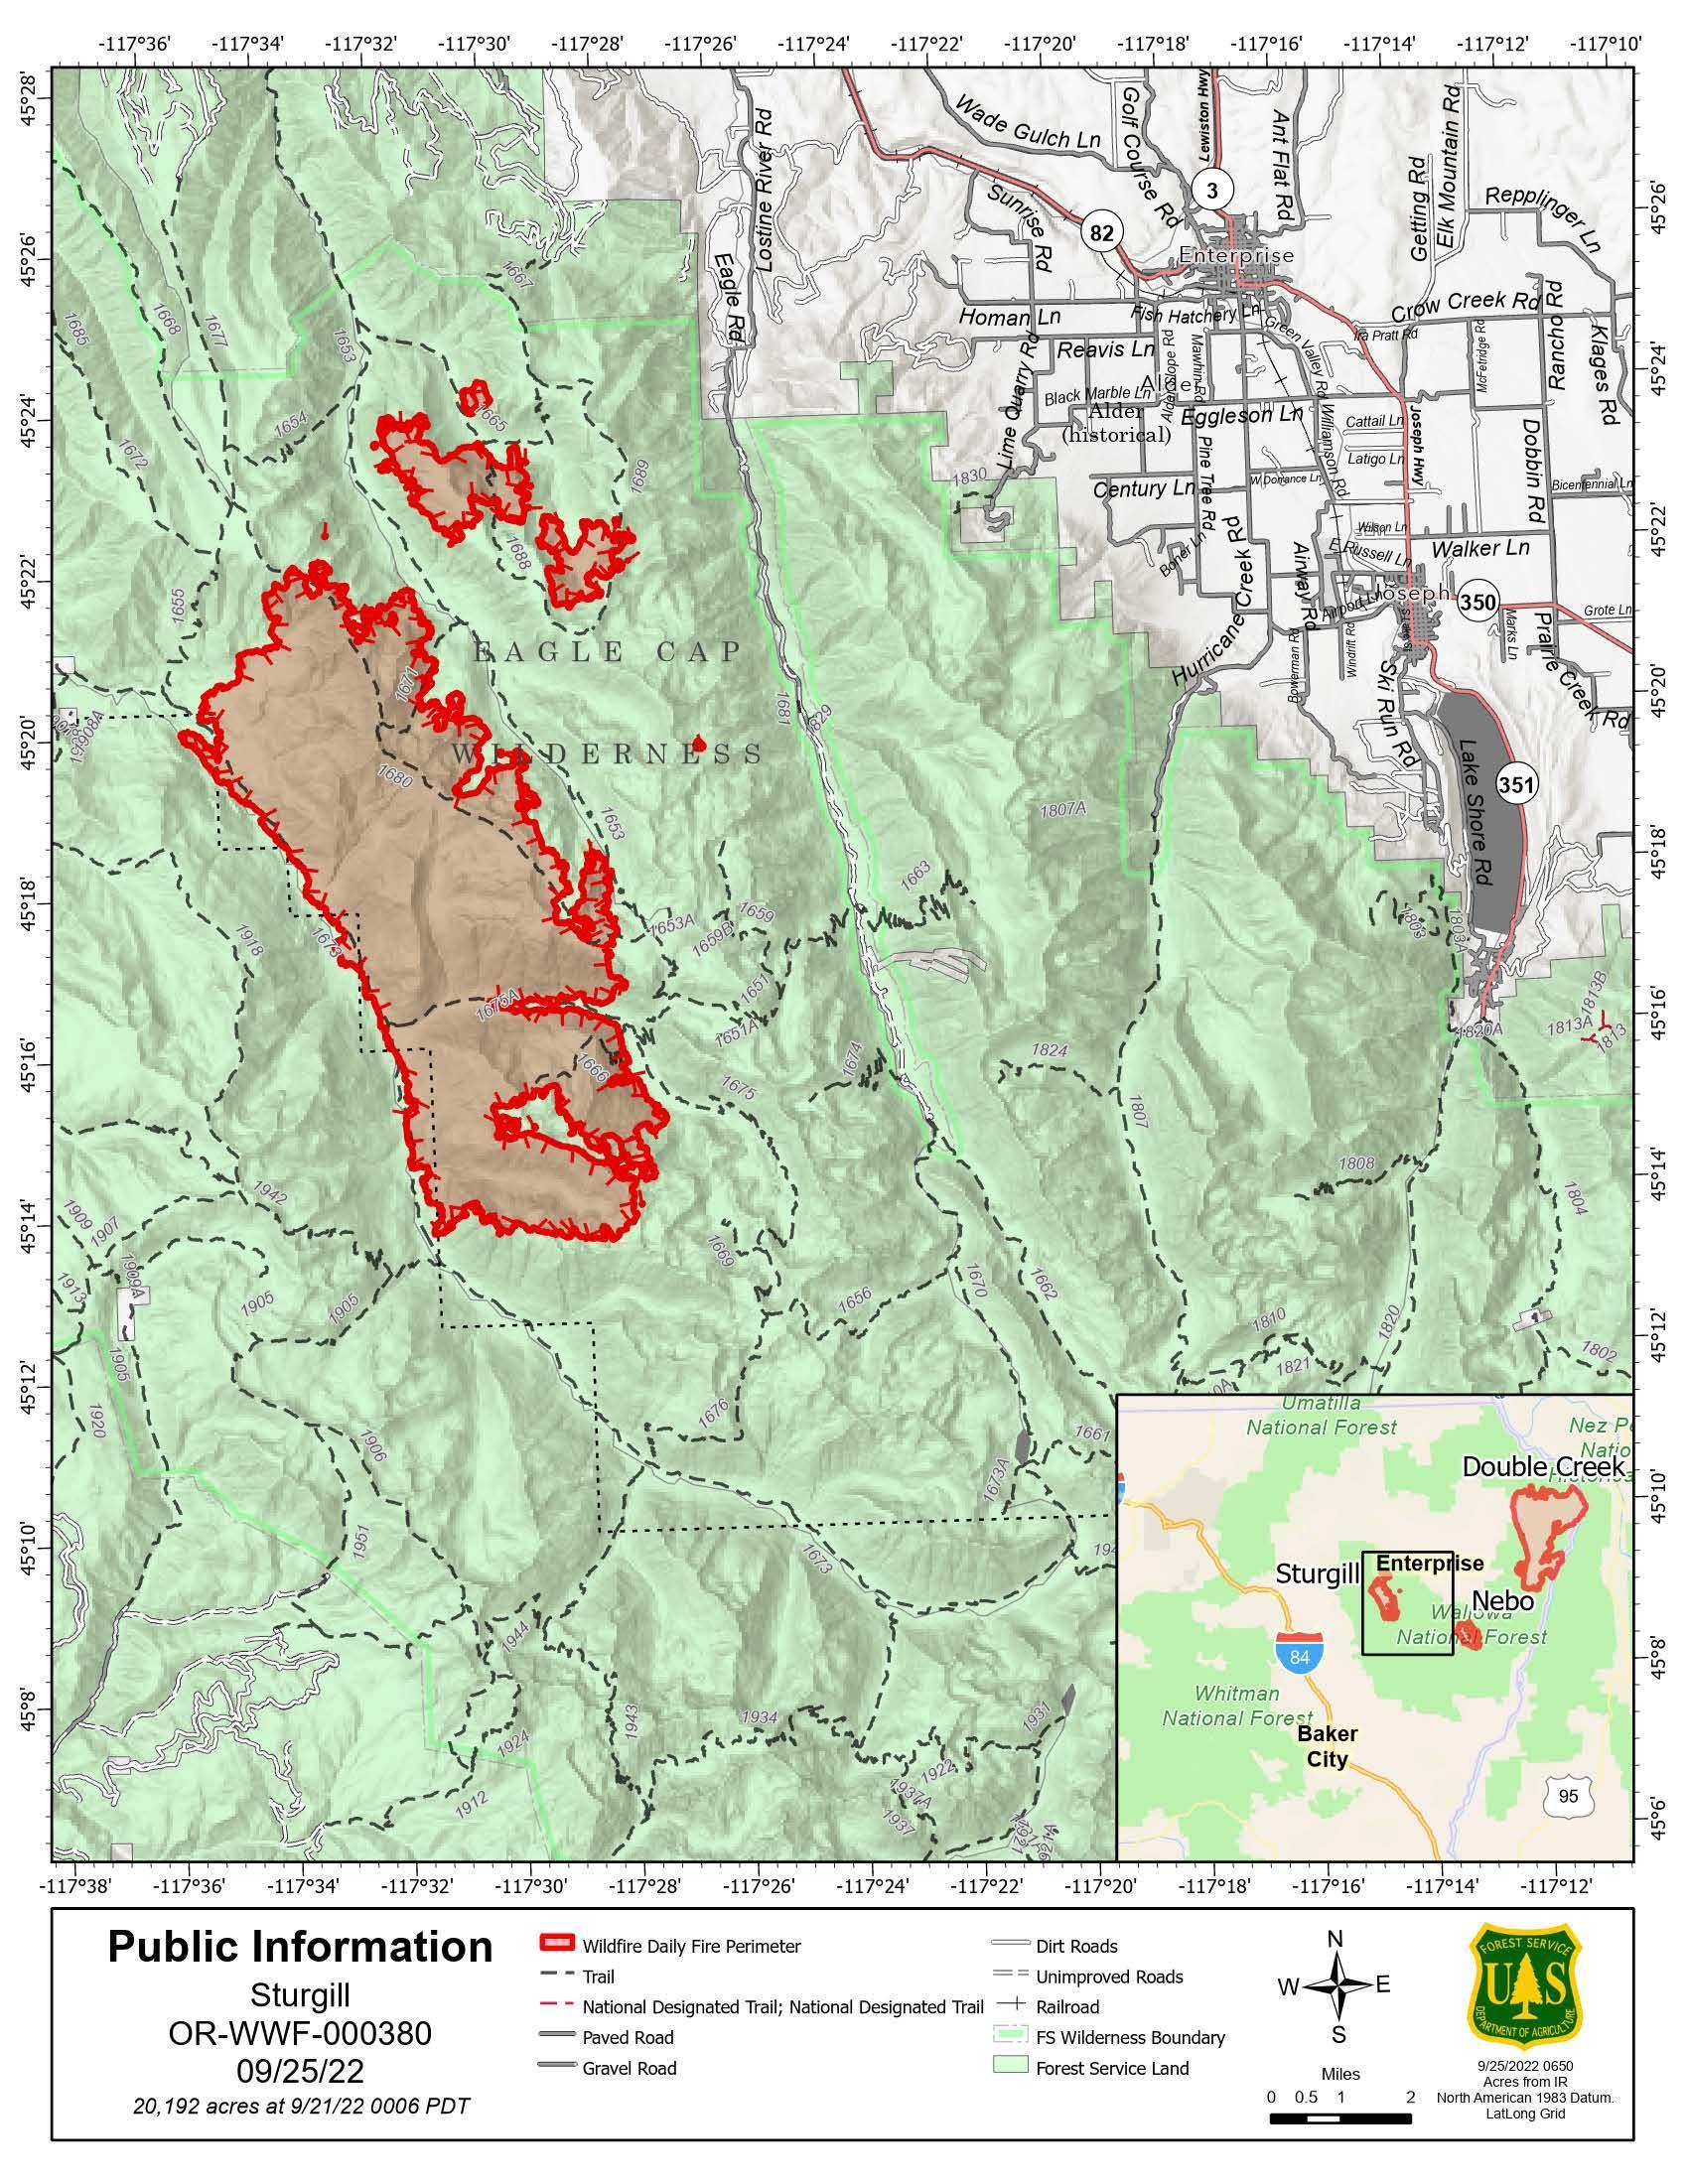 Goat Mountain 2 Fire Map - 09/26/2022